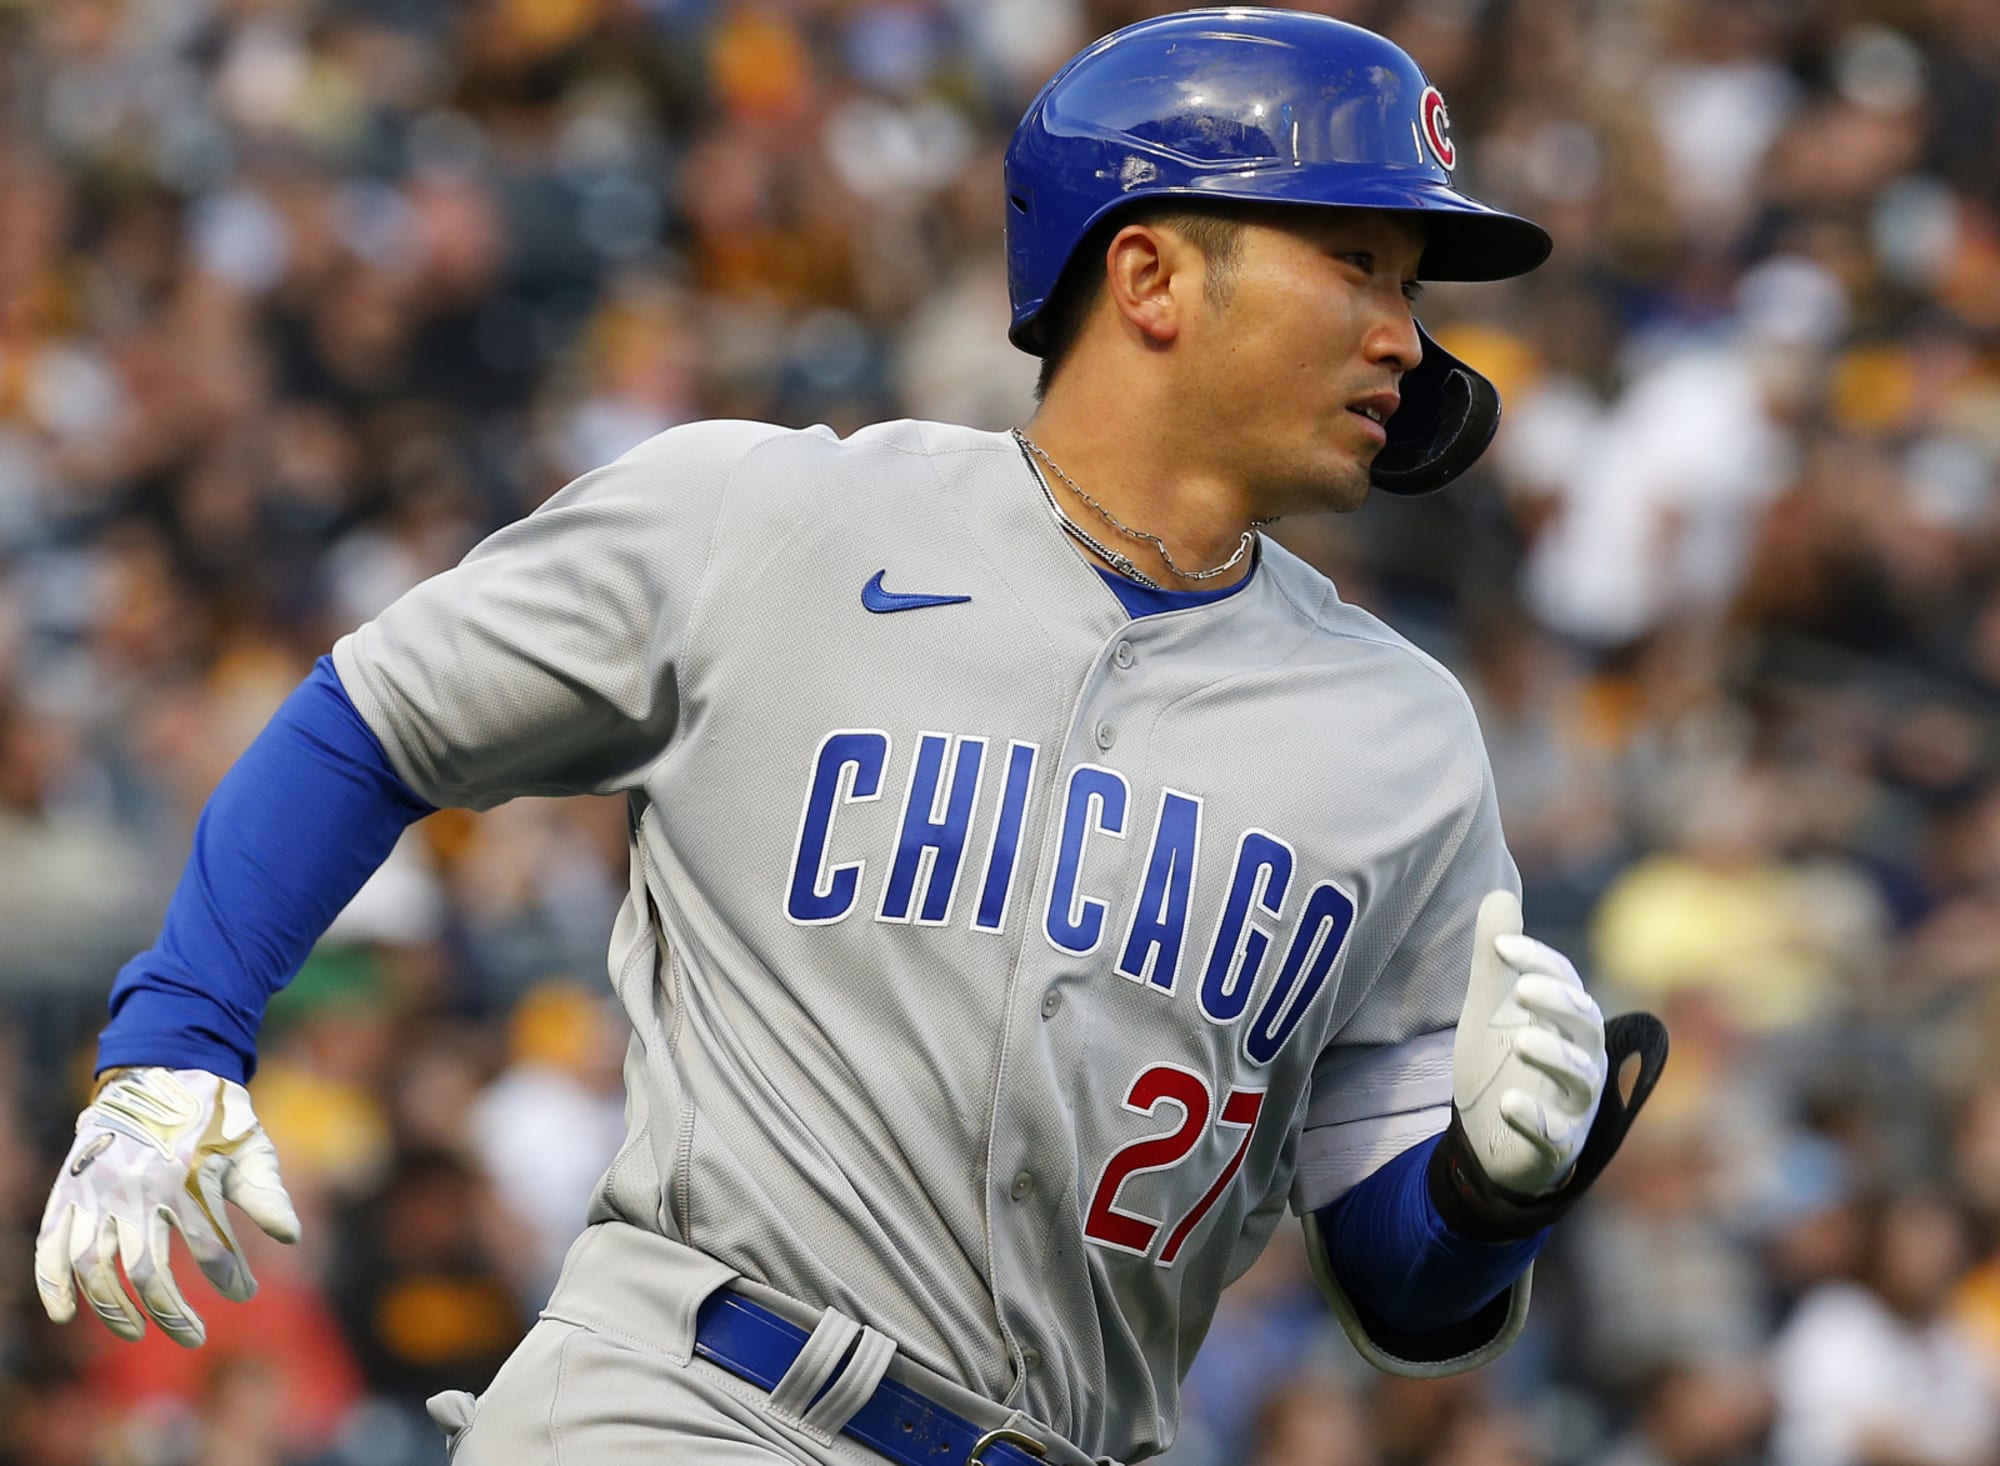 Baseball: Seiya Suzuki named MLB National League Player of the Week